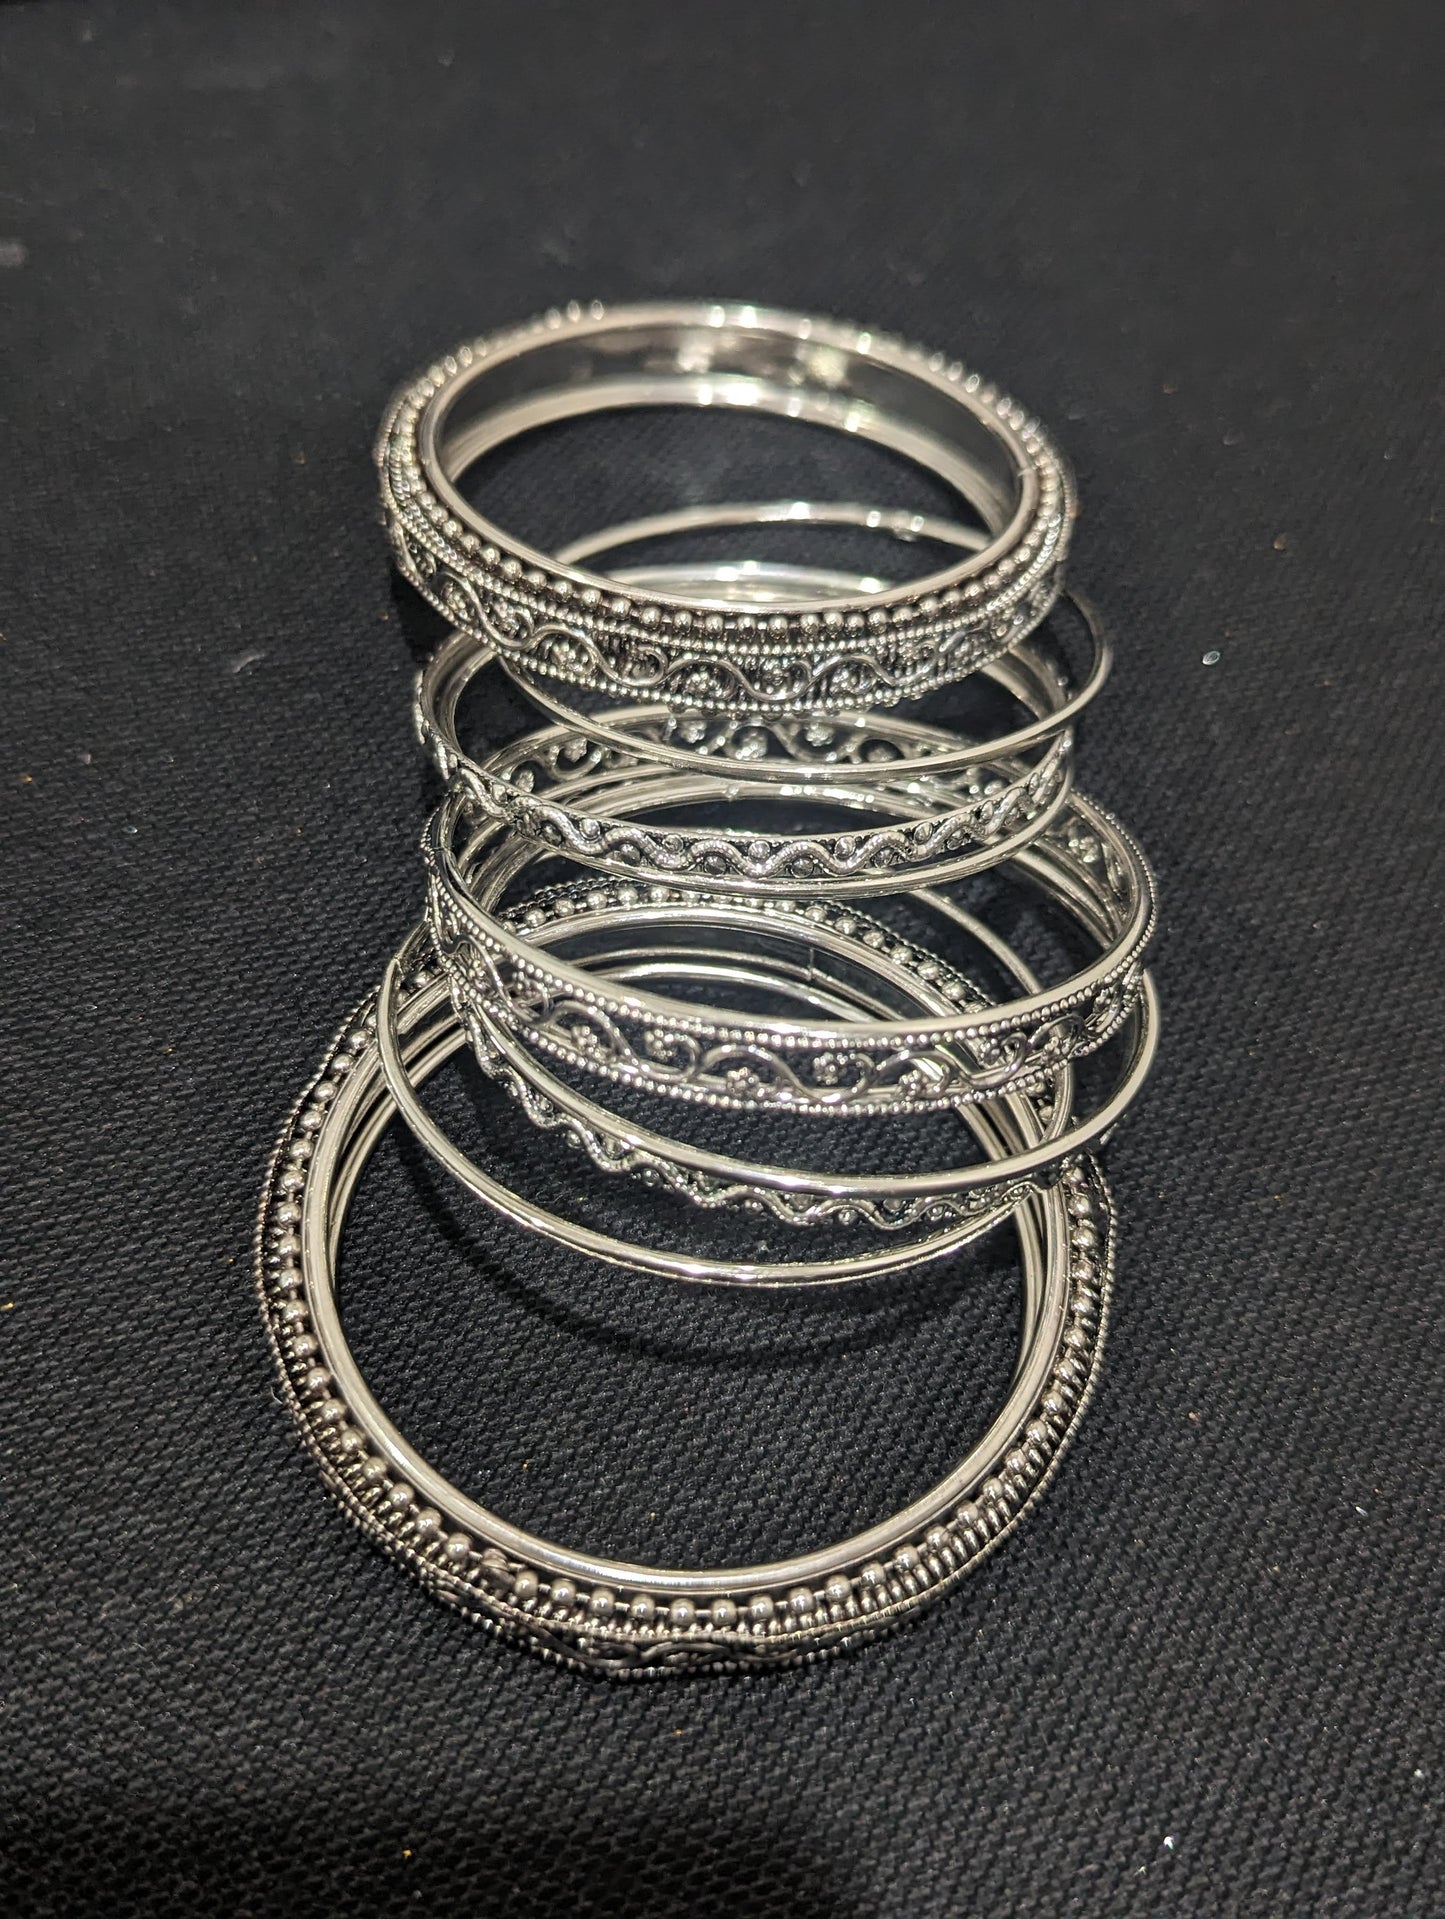 Oxidized Silver Bangles - Set of 9 bangles